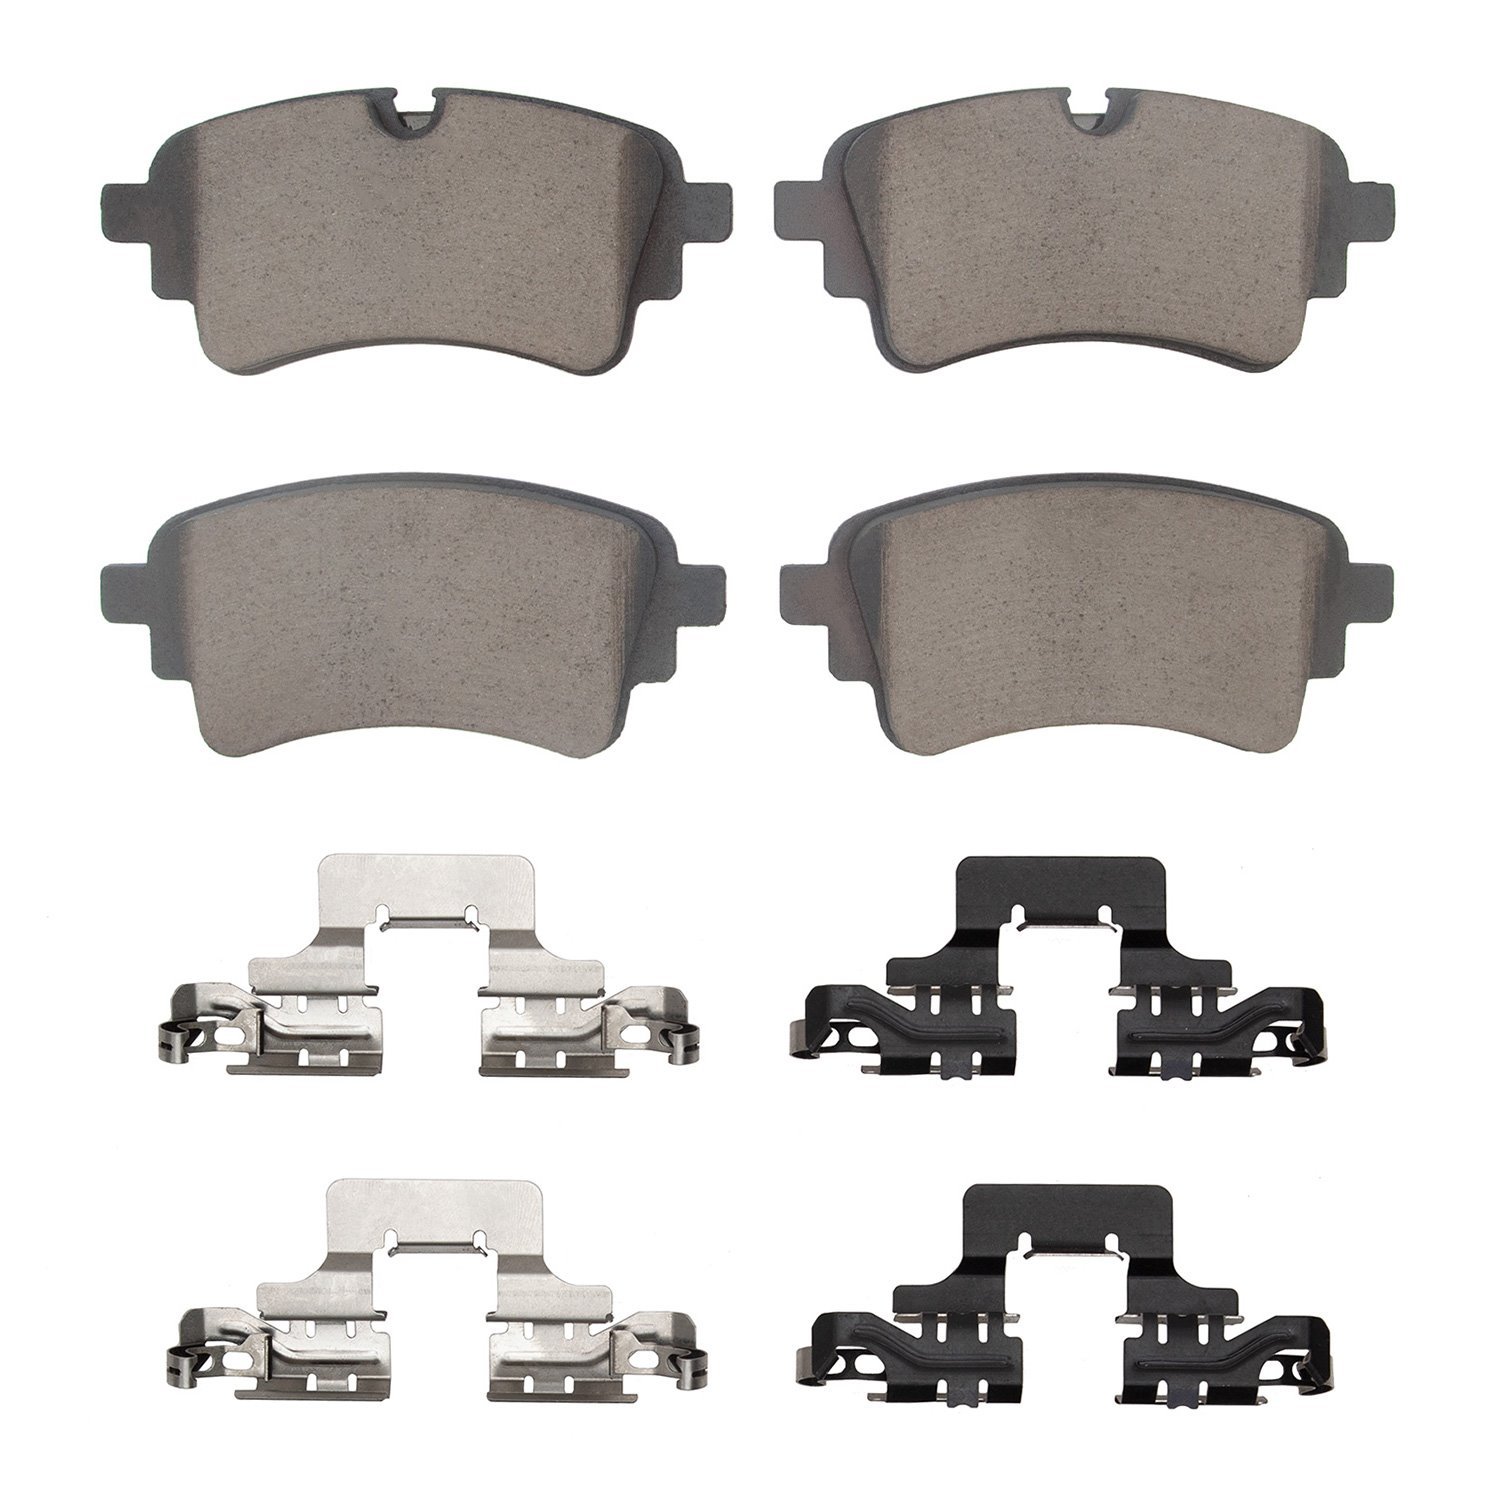 1551-2364-02 5000 Advanced Ceramic Brake Pads & Hardware Kit, Fits Select Audi/Volkswagen, Position: Rear